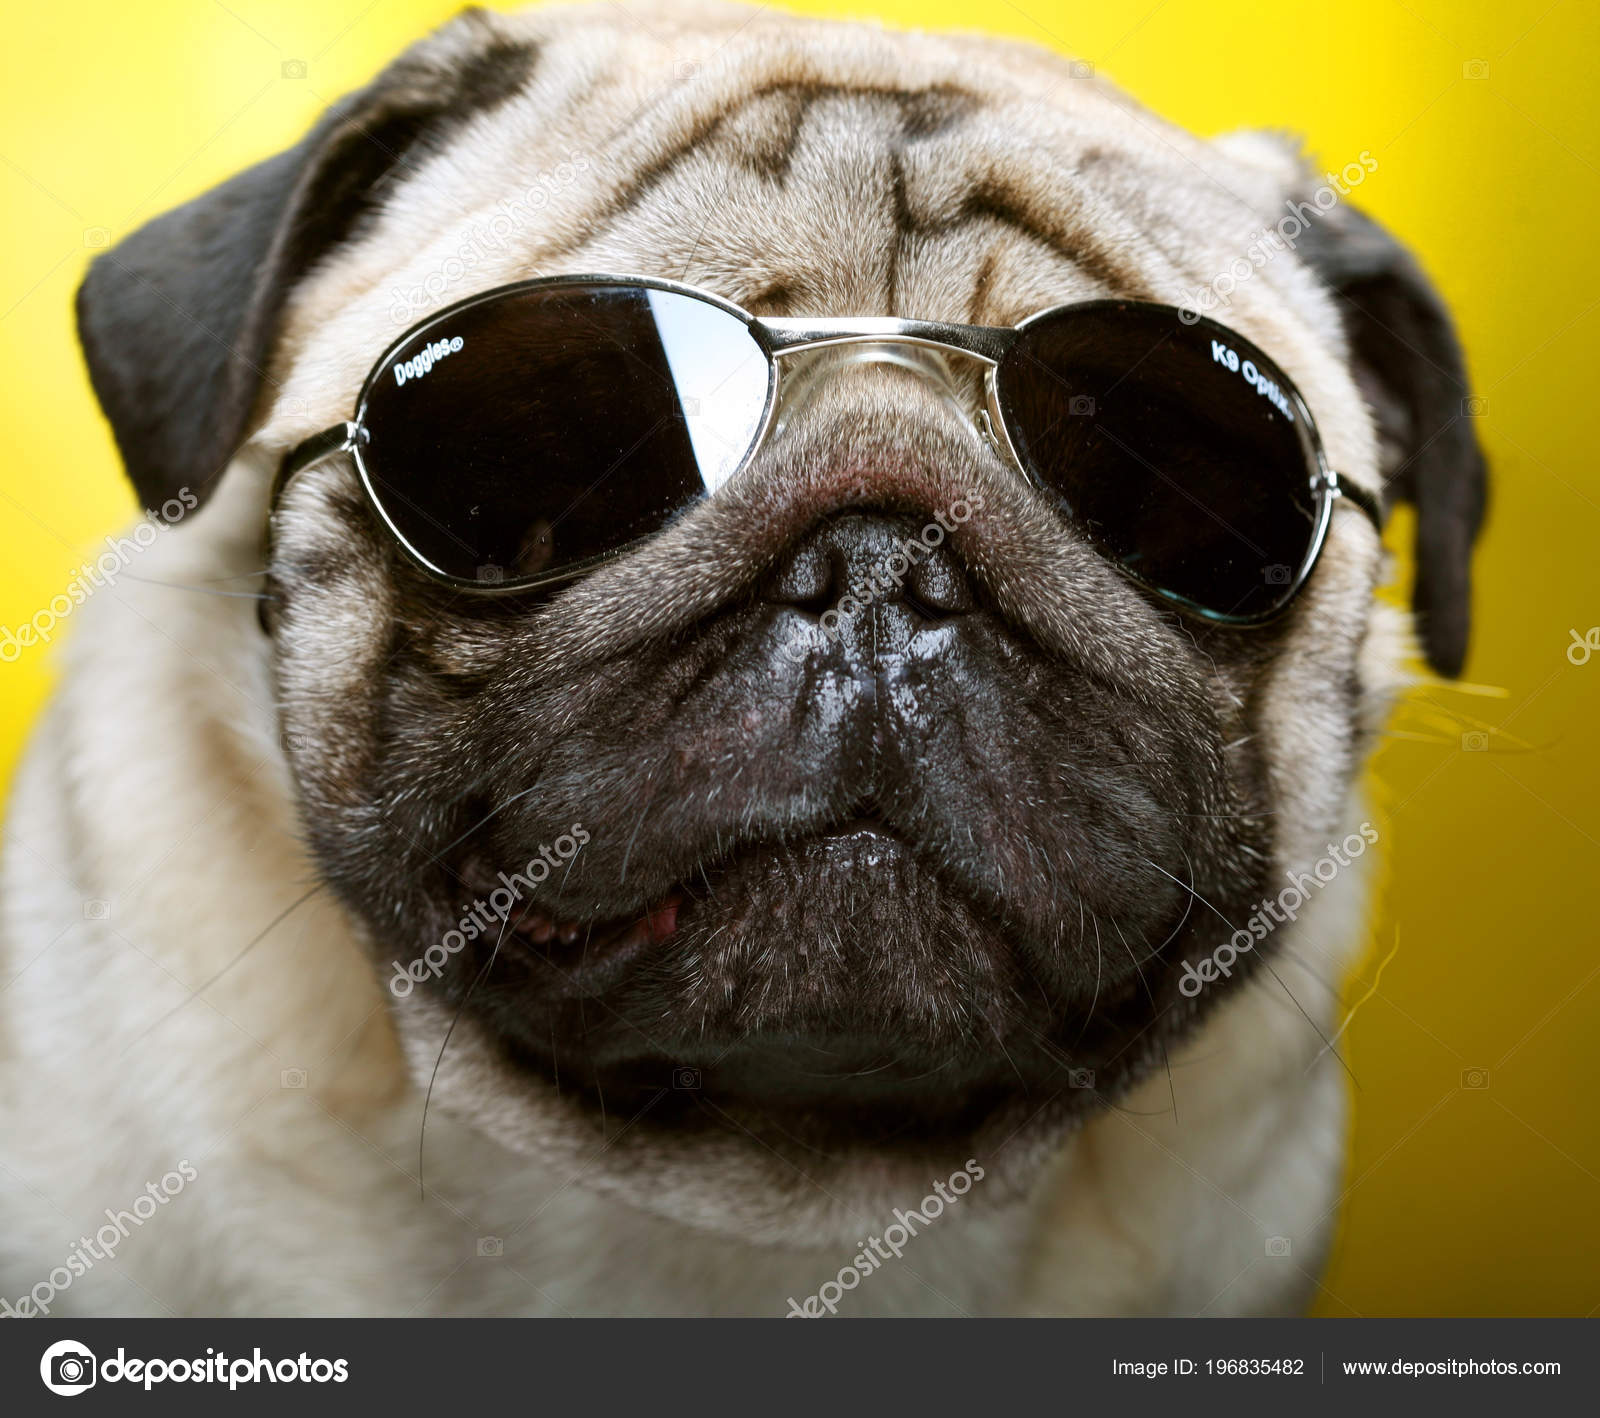 Pug with sunglasses. — Stock Photo © juice_team #196835482